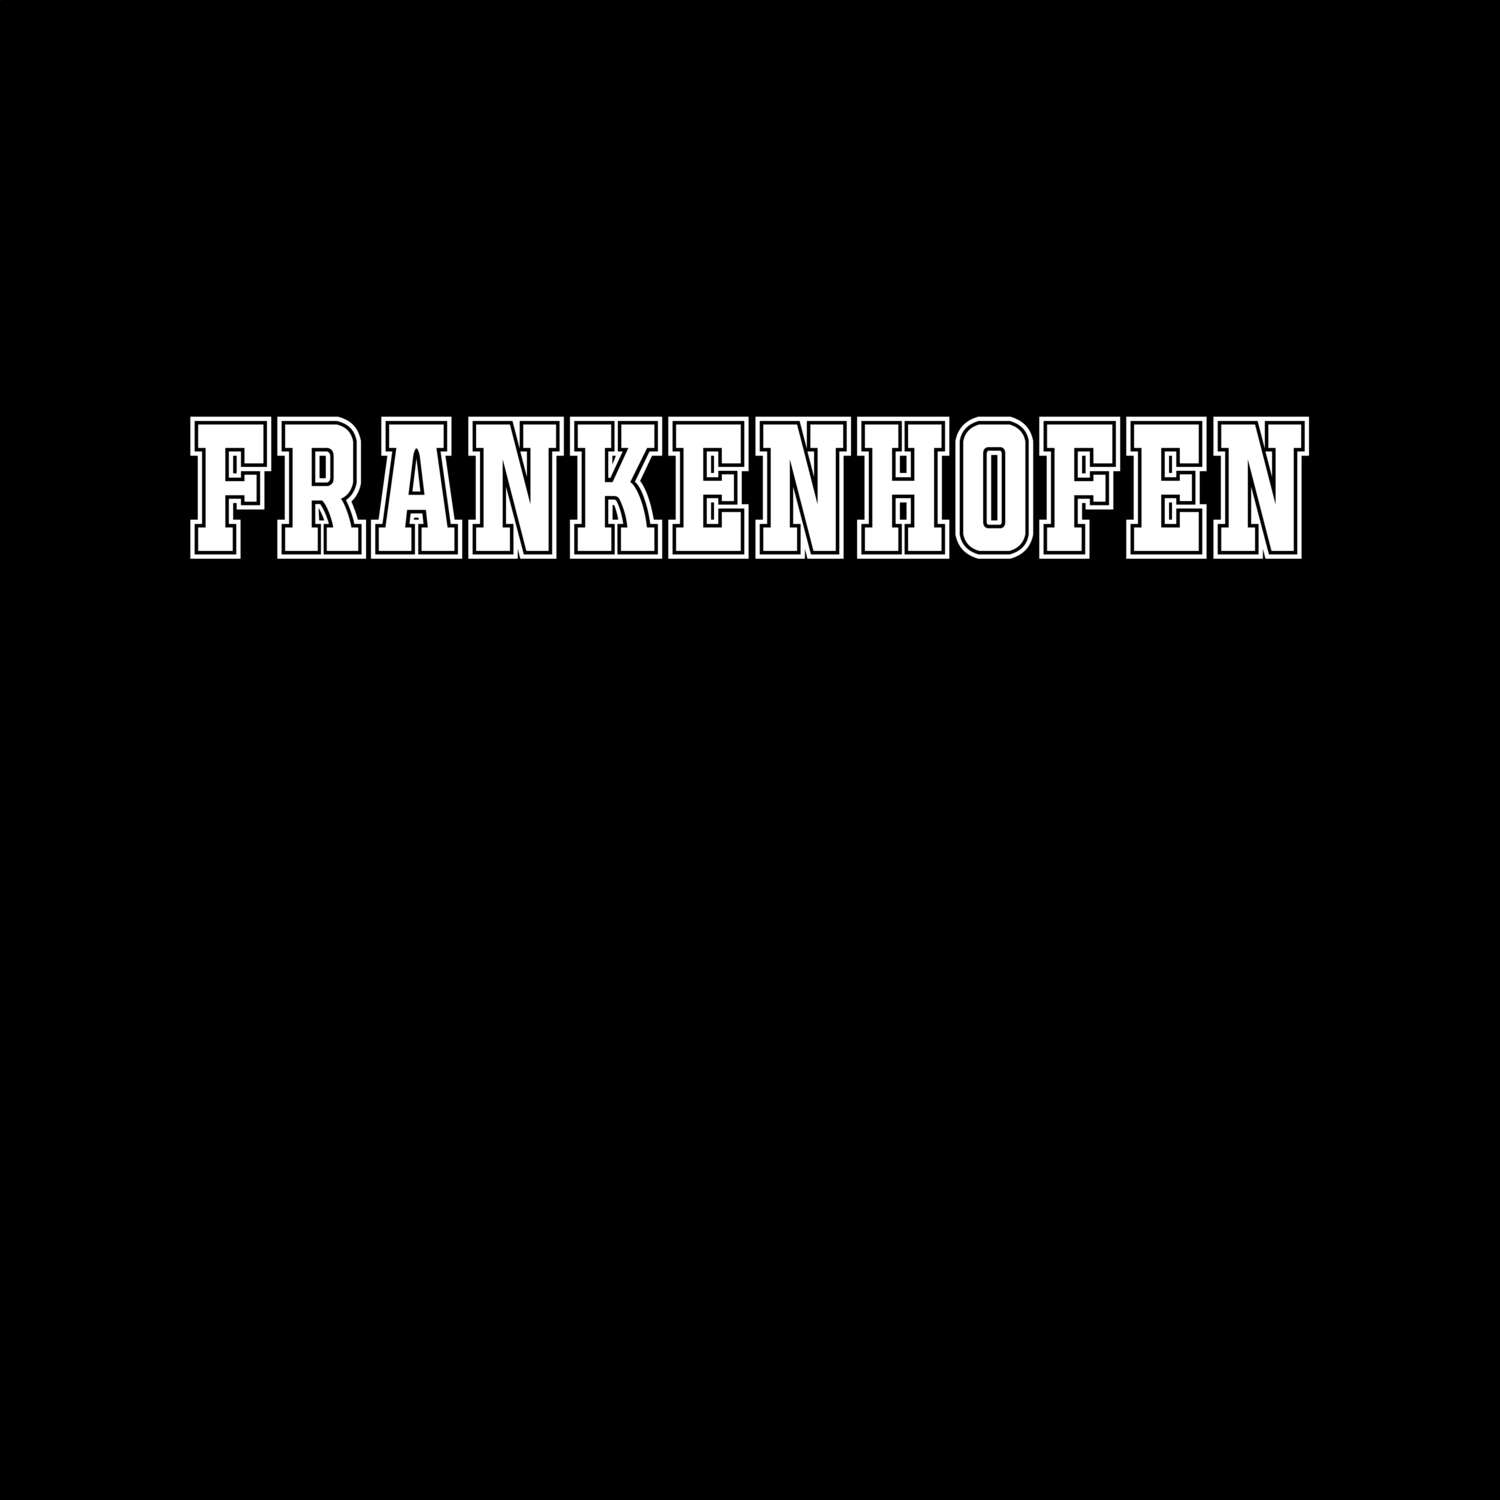 Frankenhofen T-Shirt »Classic«